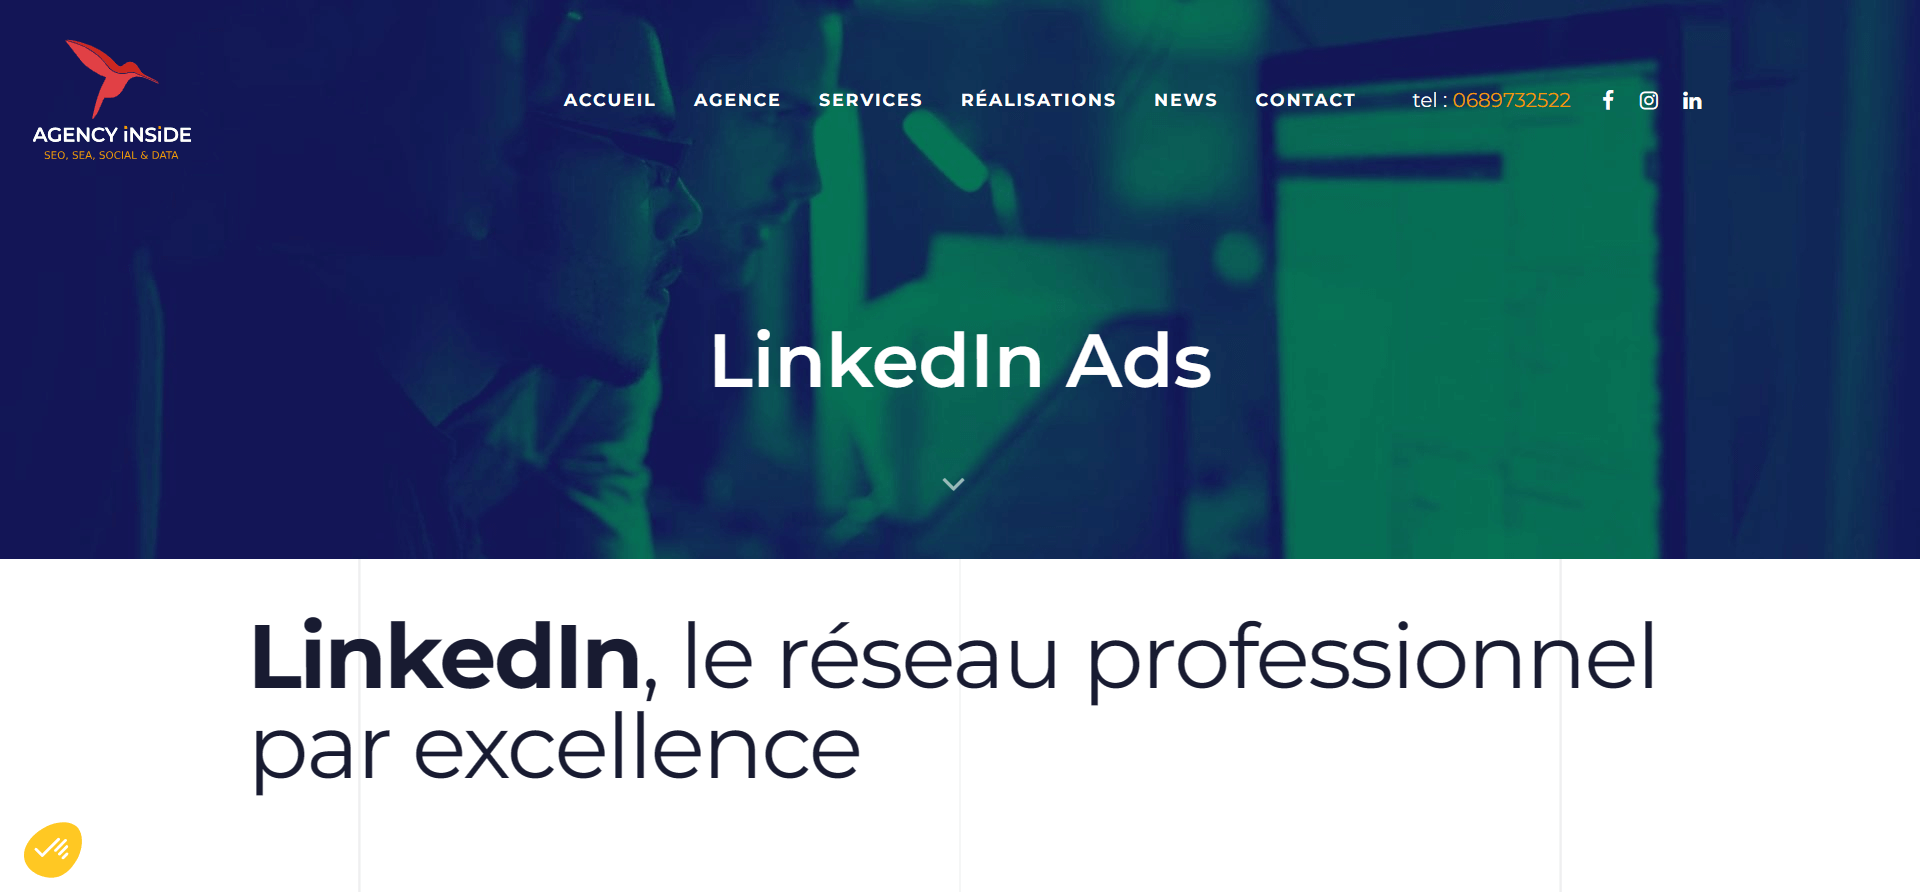 agency inside agence linkedin ads